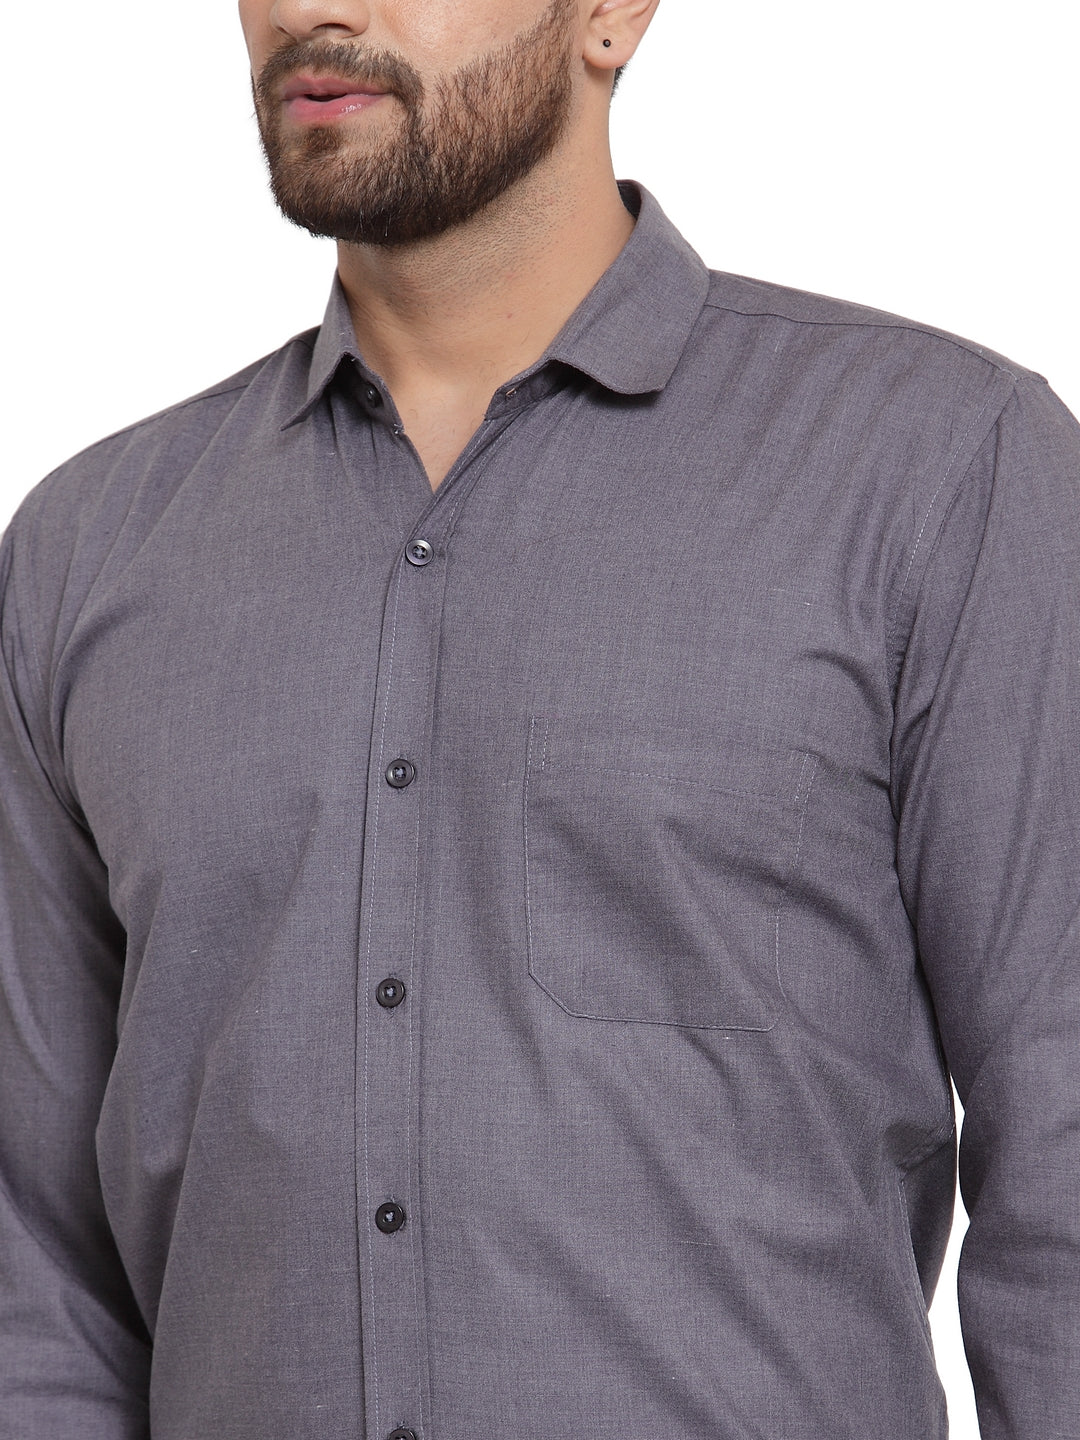 Jainish Men's Cotton Solid Charcoal Grey Formal Shirt's